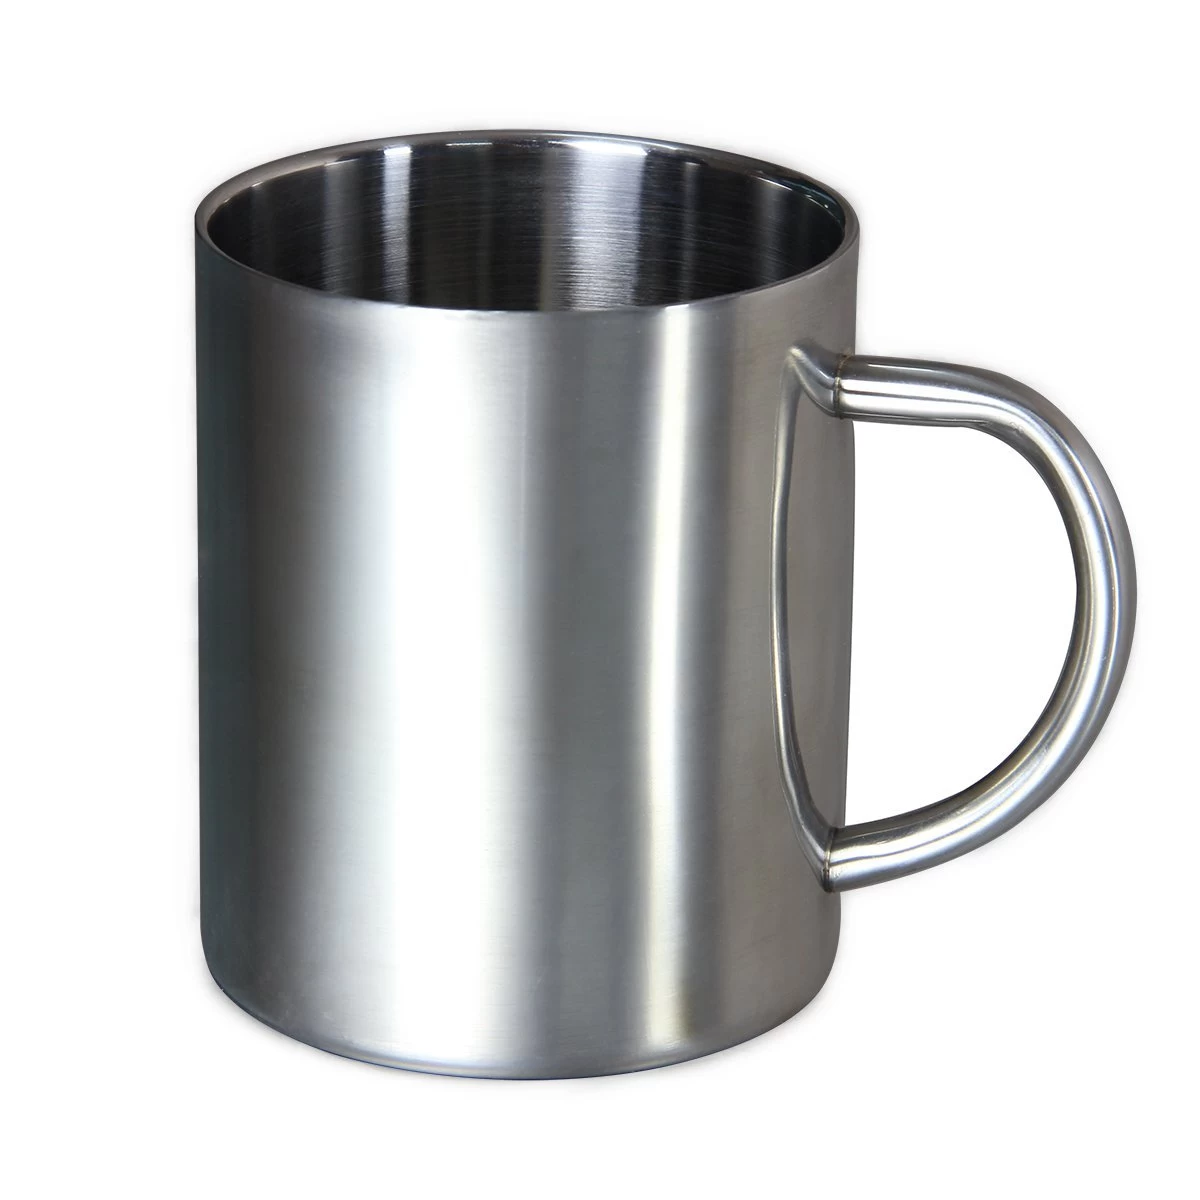 Stainless Steel Beer Mug Double Wall Coffe Mug